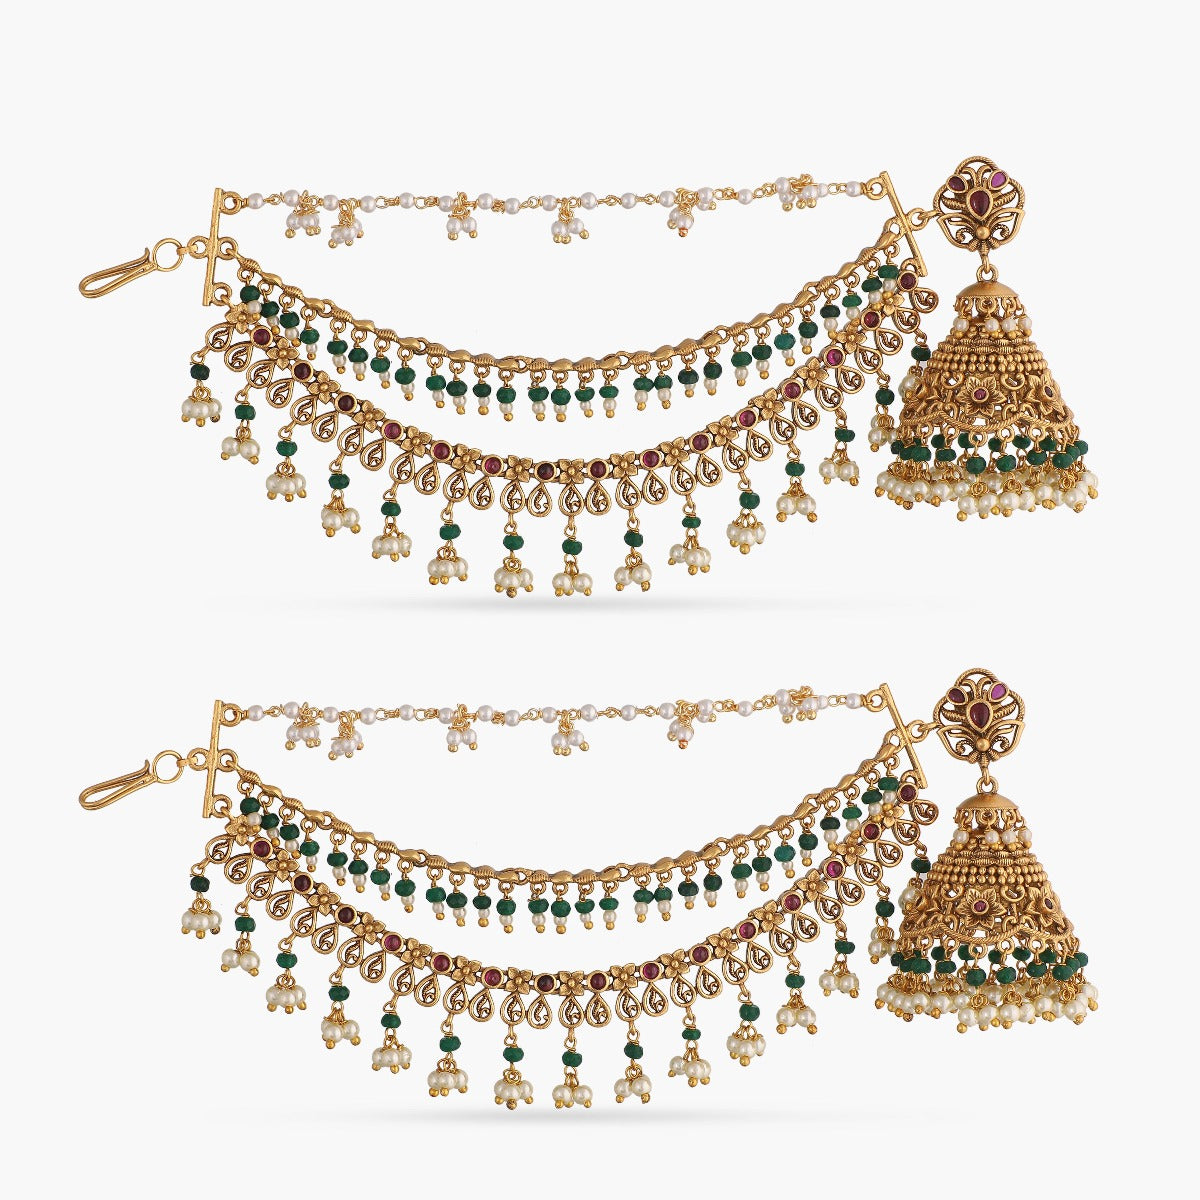 PAIR Threader Chain Earrings – Beauty Mark Body Jewelry